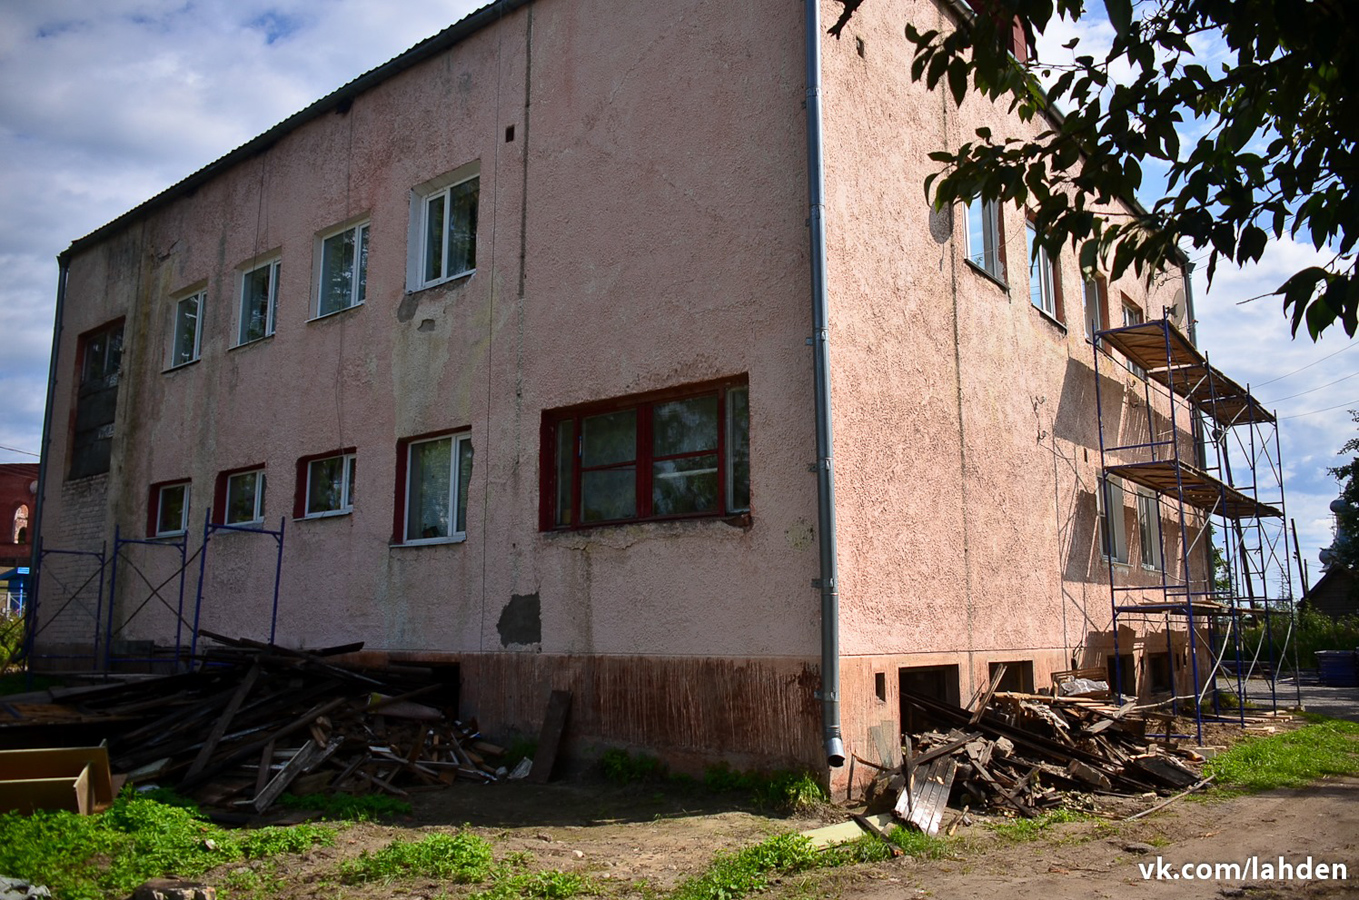 August 15, 2019. Jaakkima. Former commune office